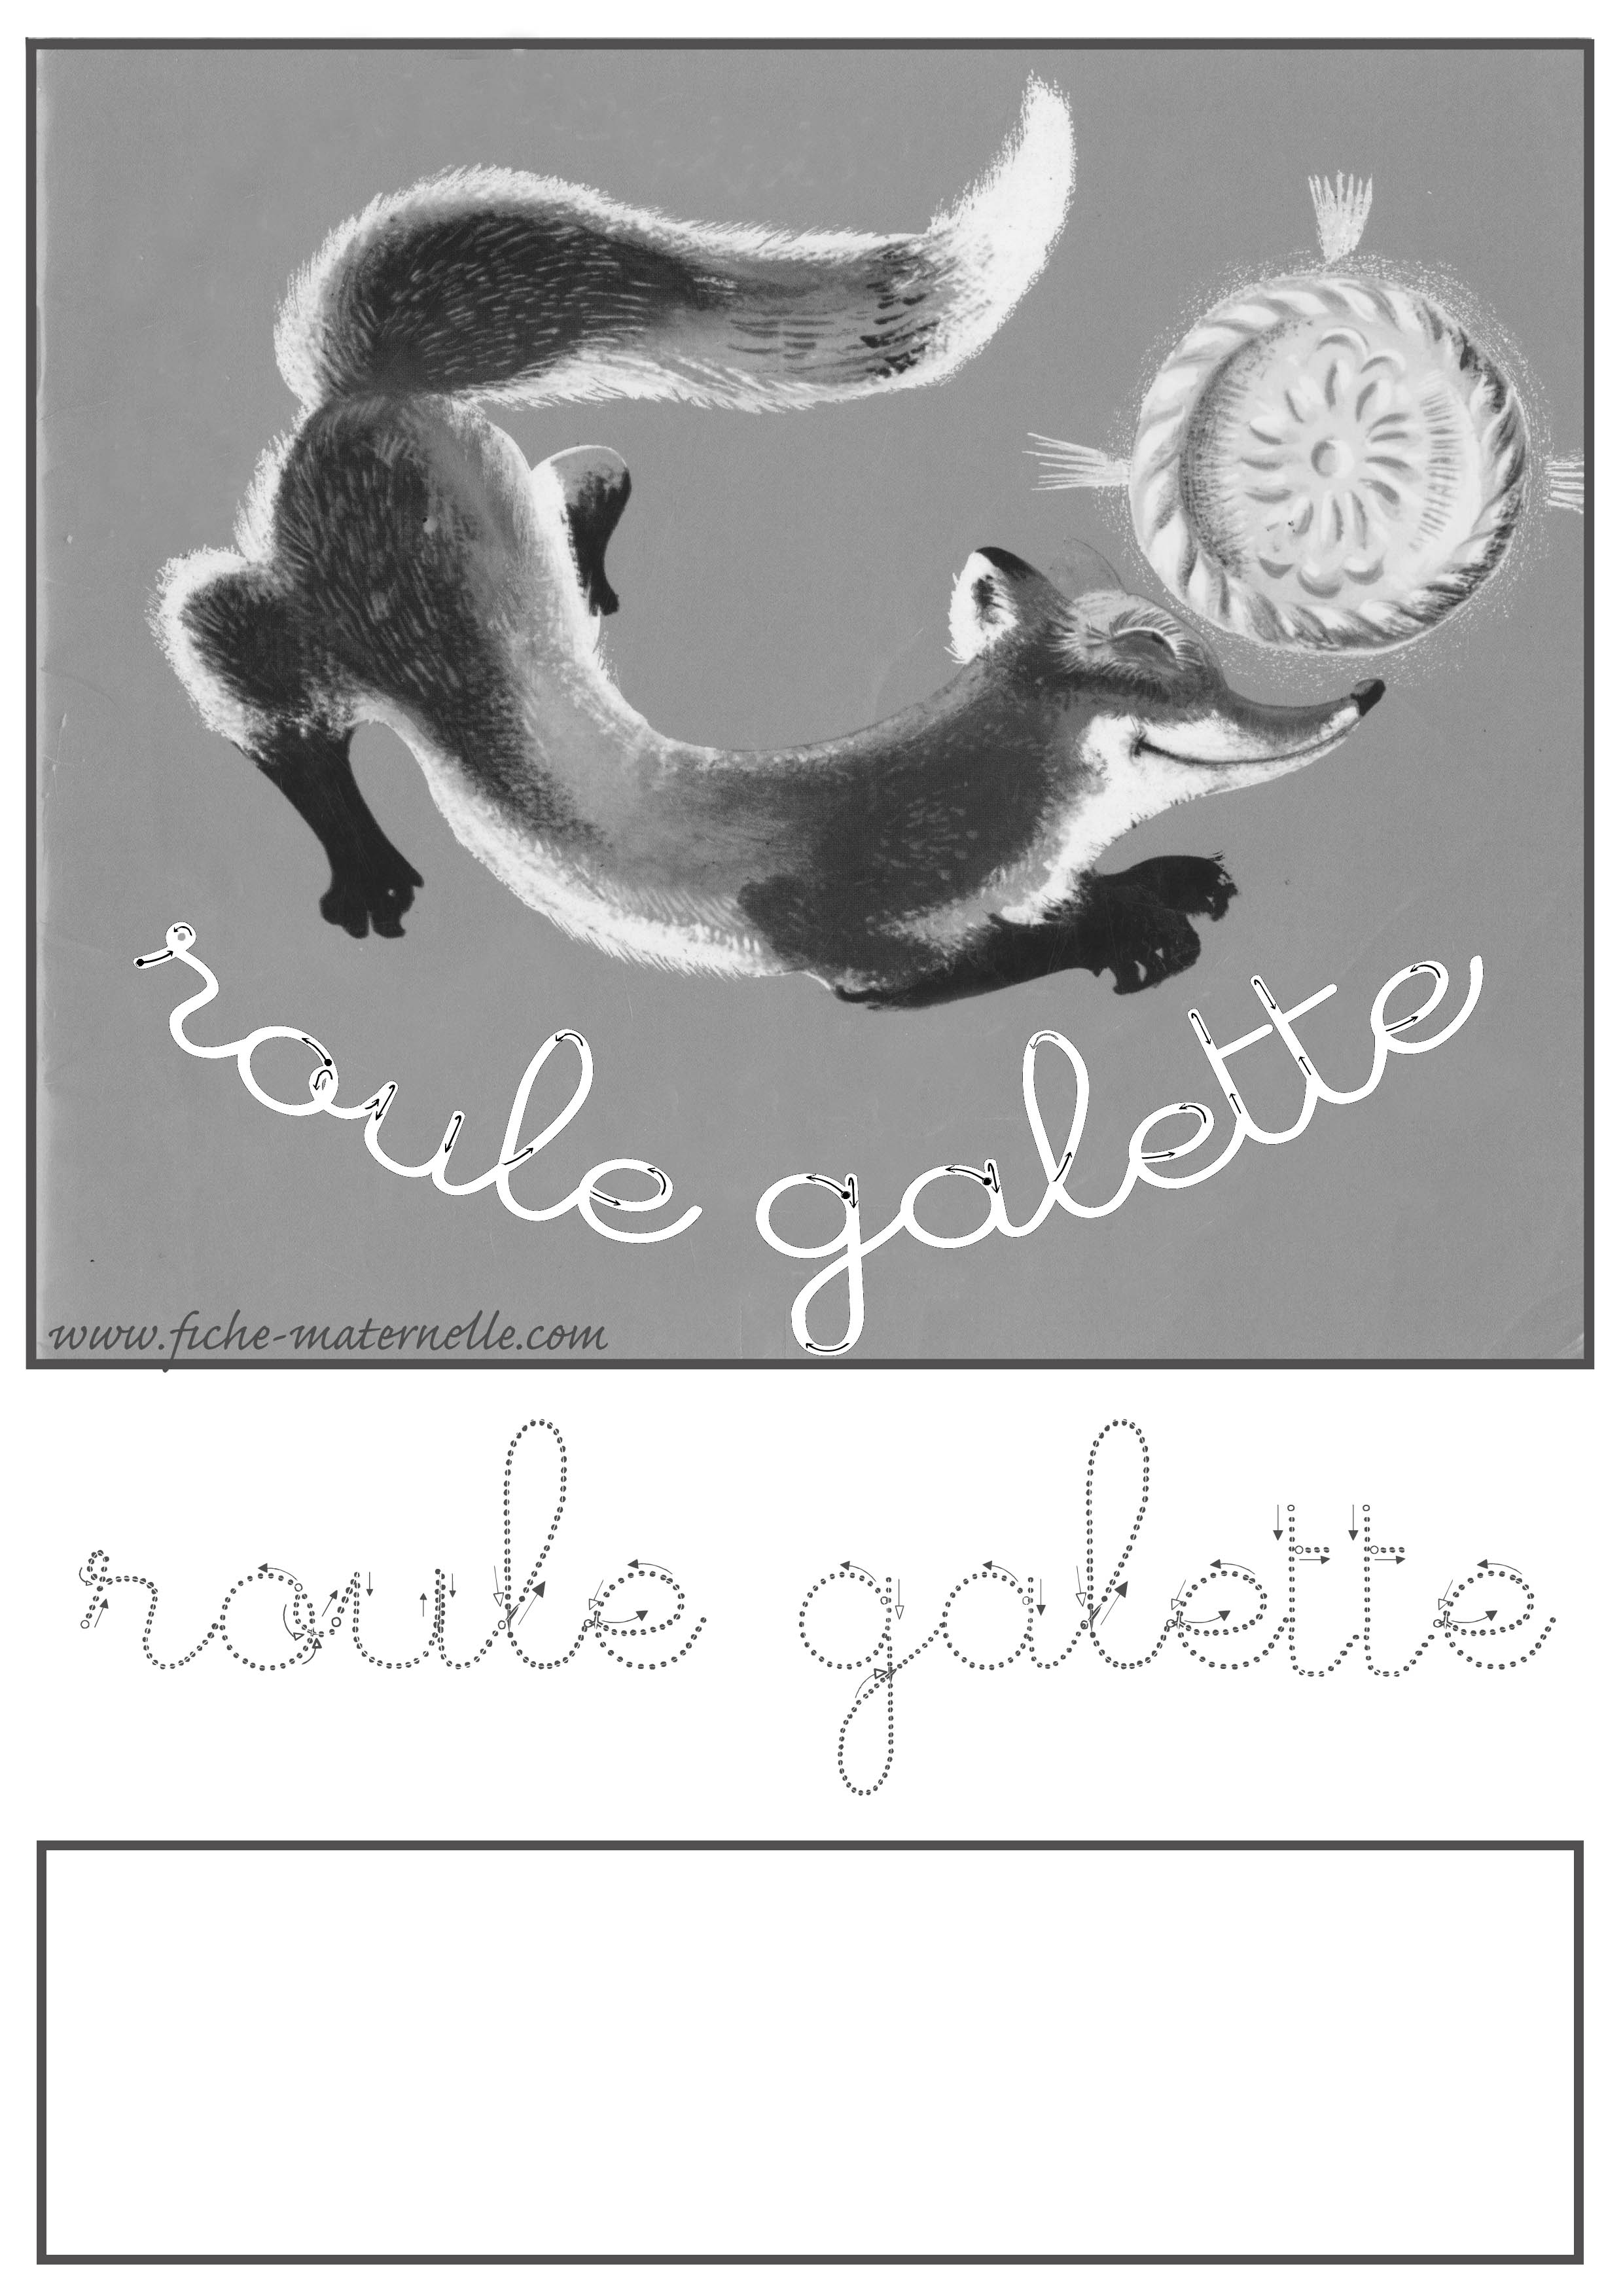 Roule Galette